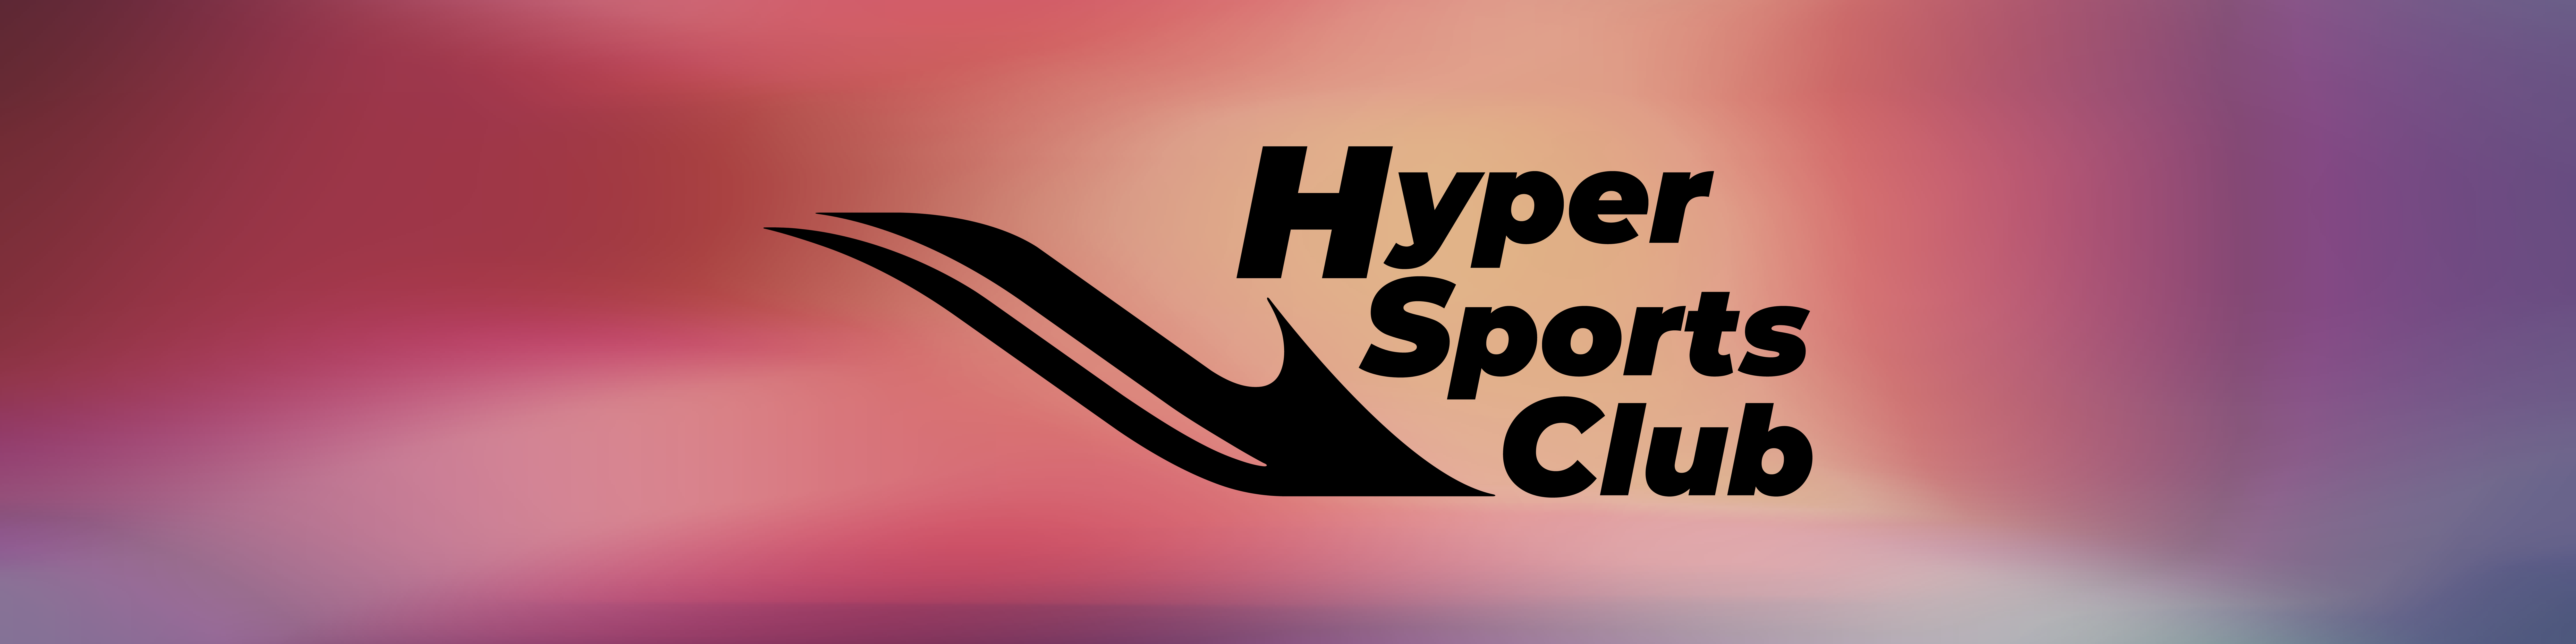 HyperSportsClubOfficial 横幅